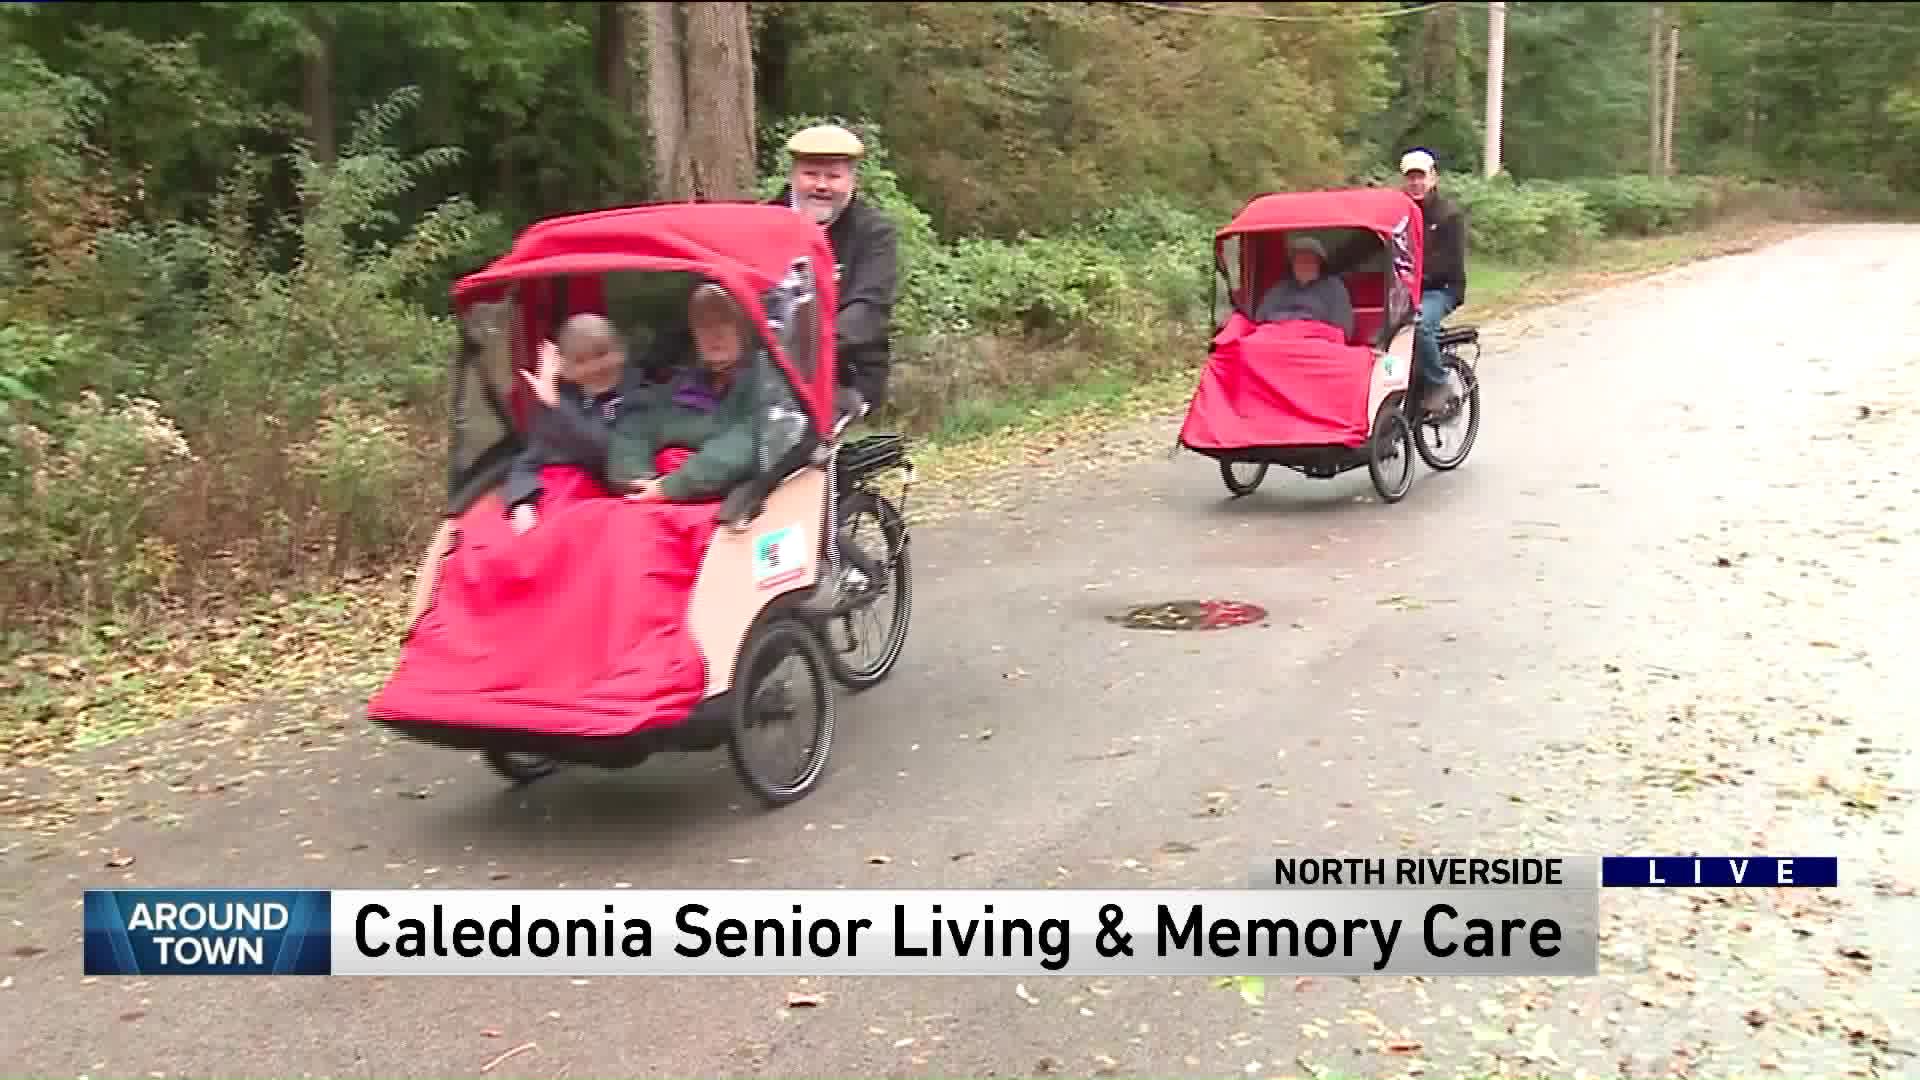 Around Town visits Caledonia Senior Living & Memory Care